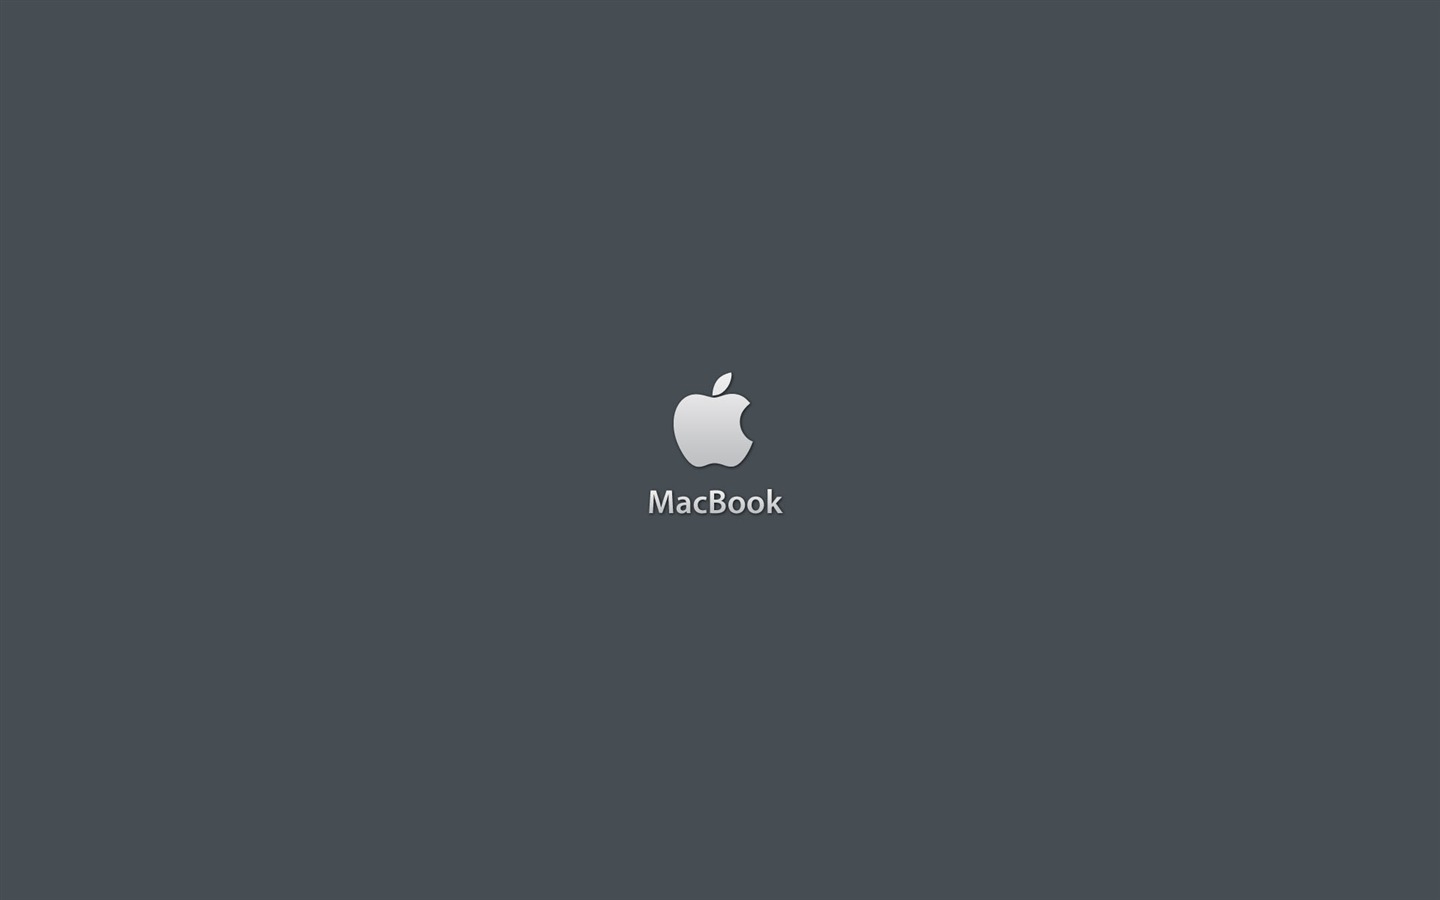 Apple theme wallpaper album (5) #9 - 1440x900